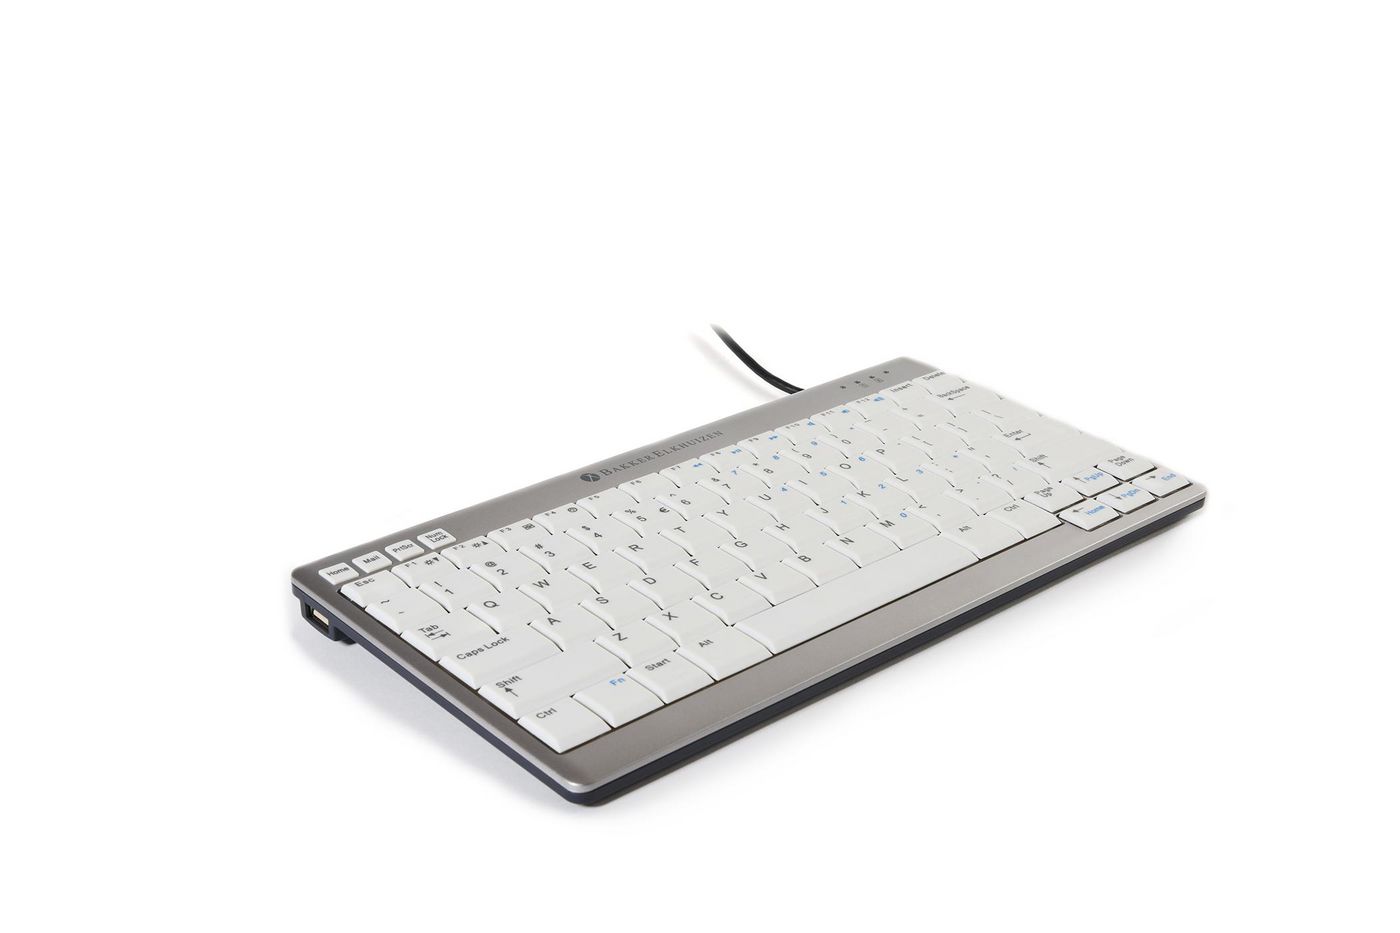 BAKKERELKHUIZEN Bakker Elkhuizen Tastatur Ultraboard 950 Compact DE Layout